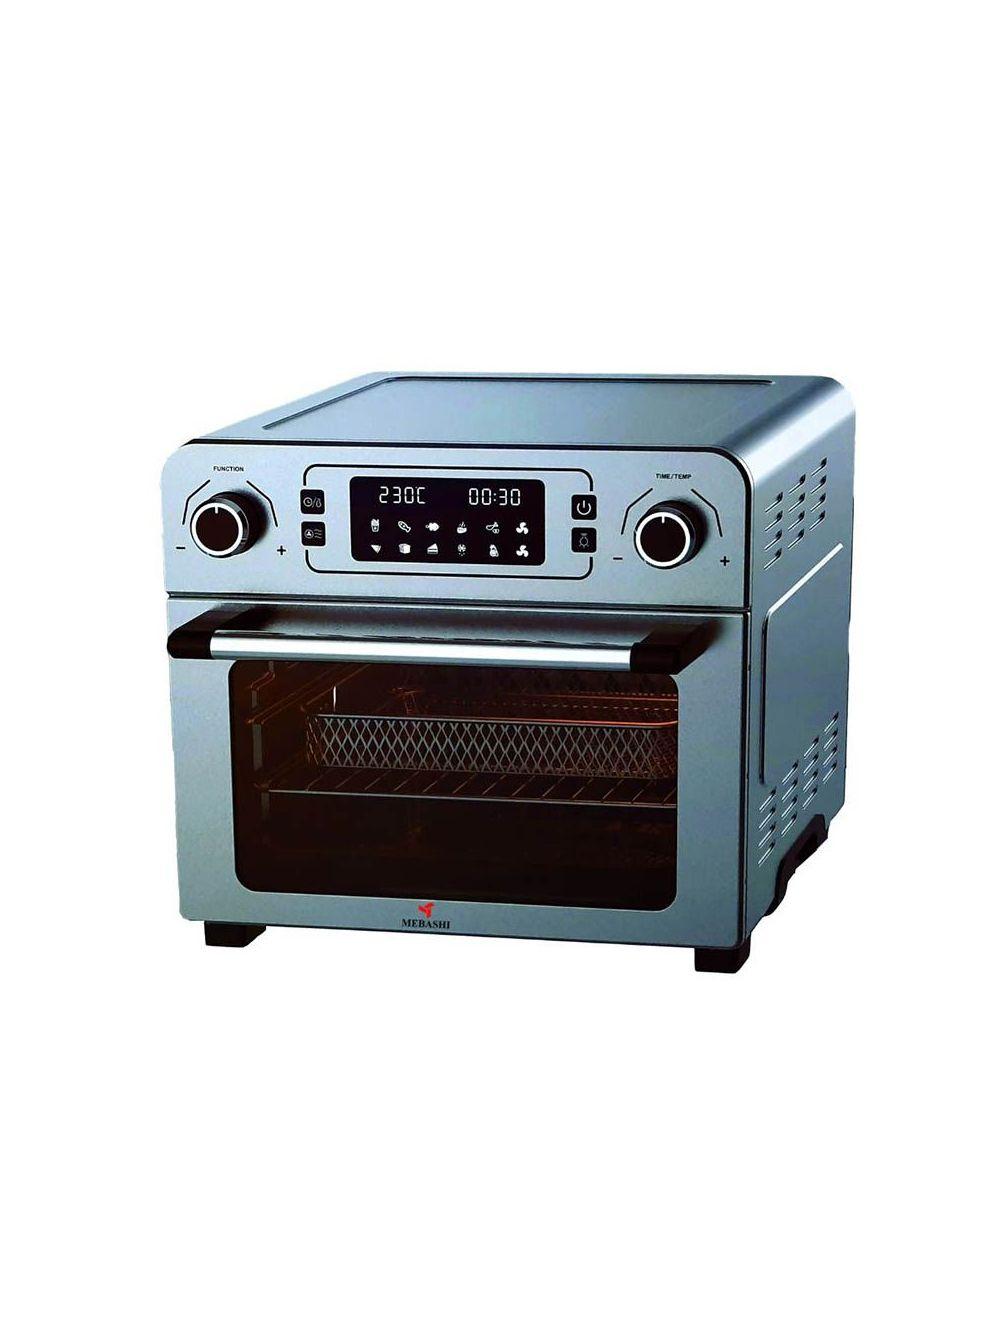 Mebashi 10 Present Menu Air Fryer Oven 23 liter capacity